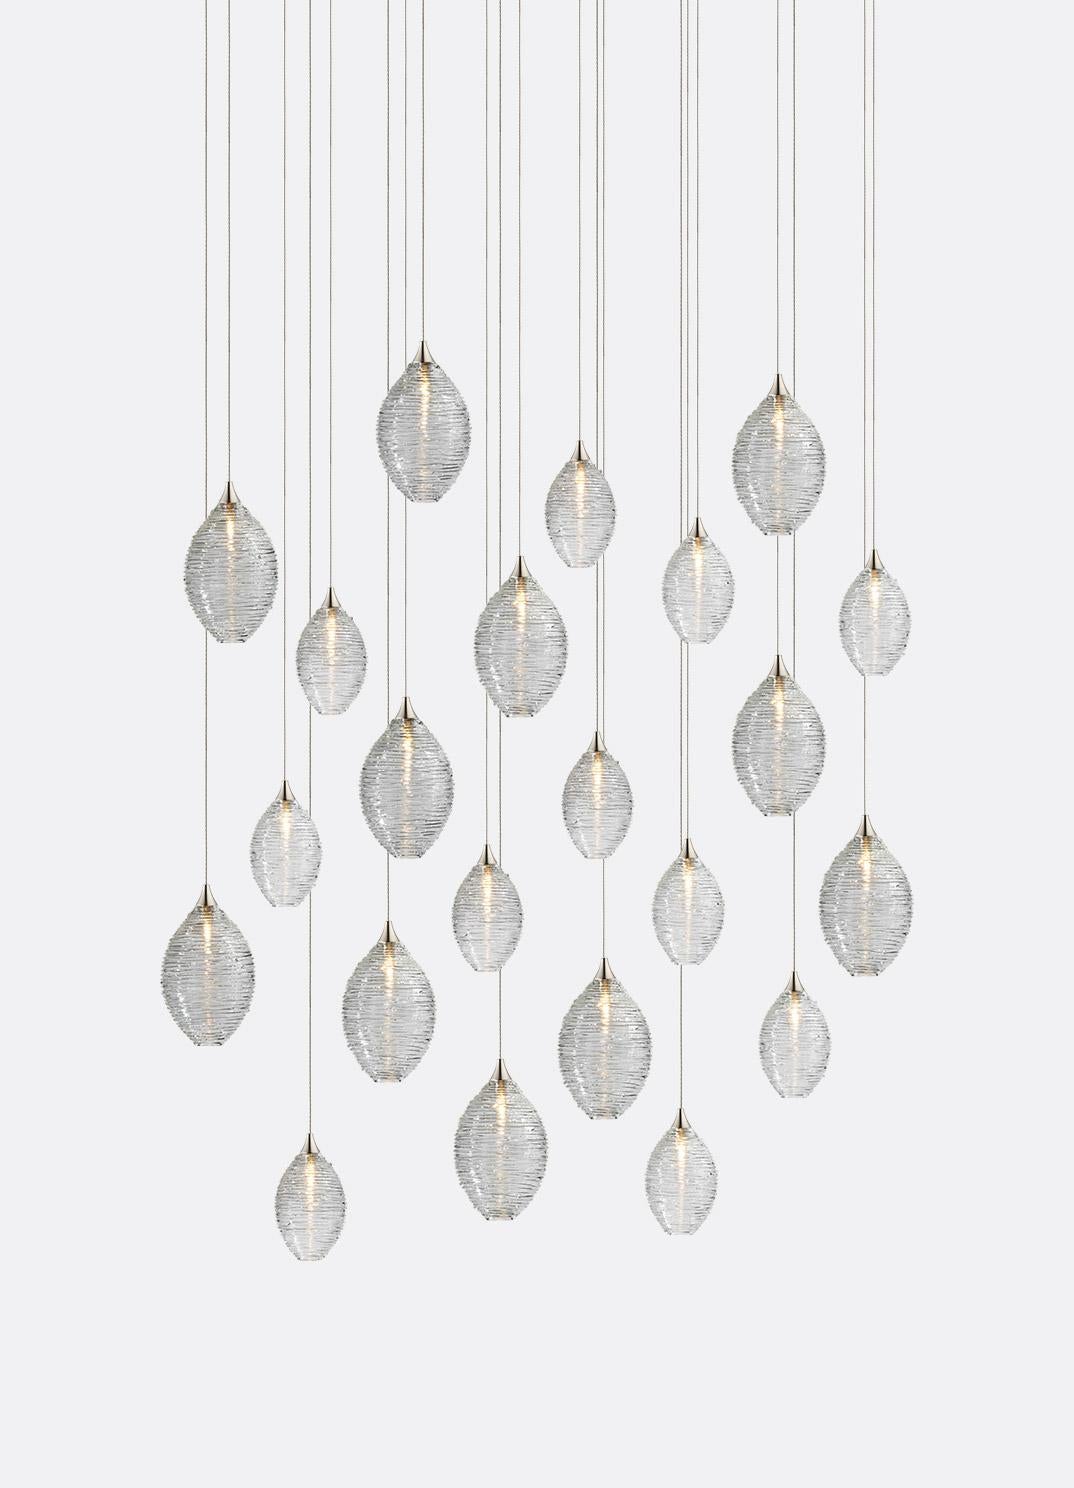 Hand blown glass pendants fixtures. 22 glass pendants on 18